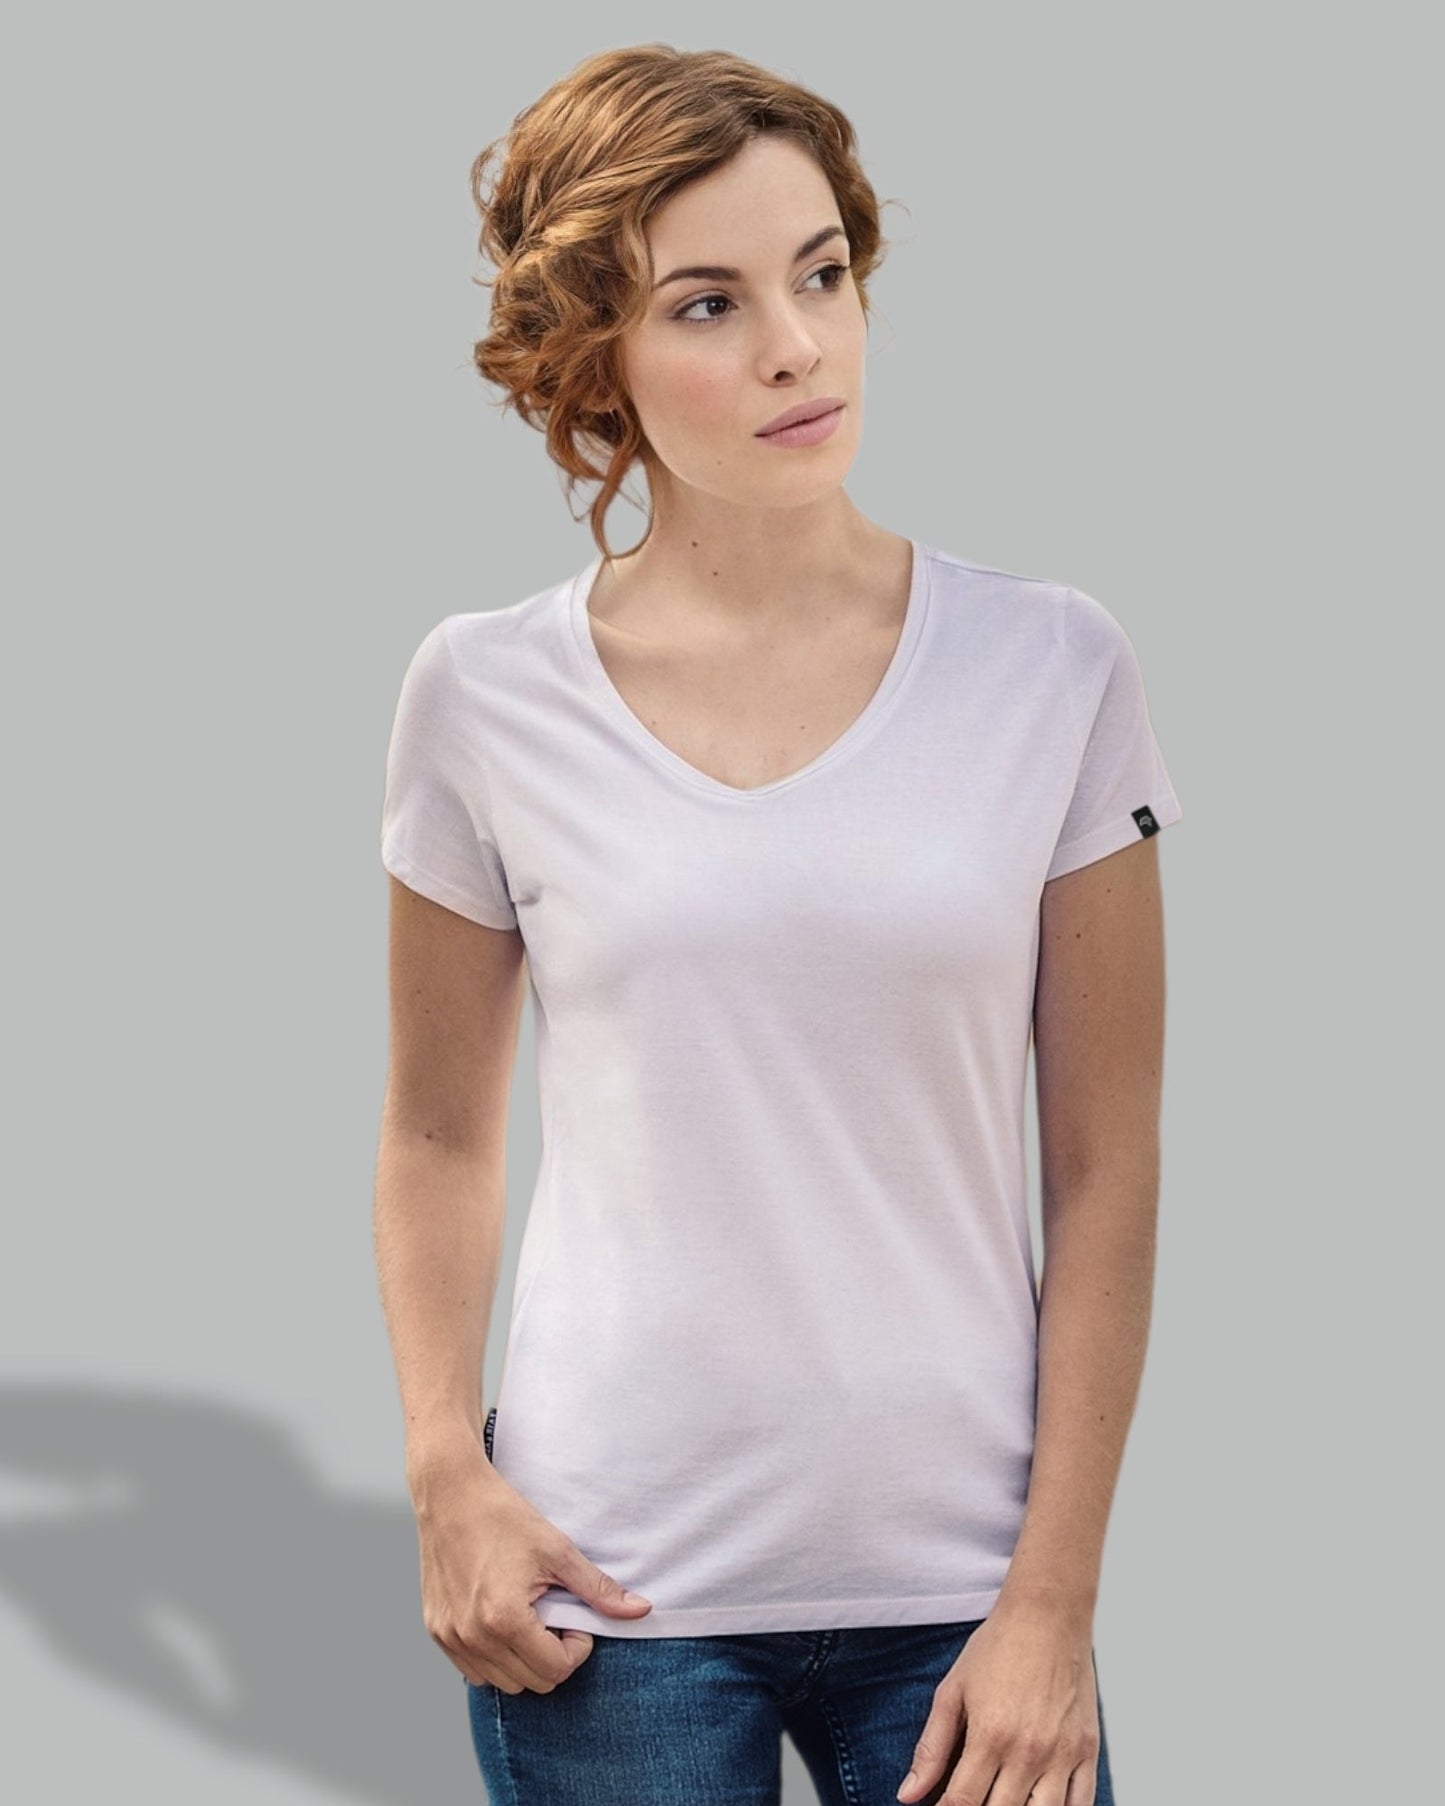 ― % ― RMH 0202 ― Damen Luxury Bio-Baumwolle V-Neck T-Shirt - Heather Grau Melange [S]